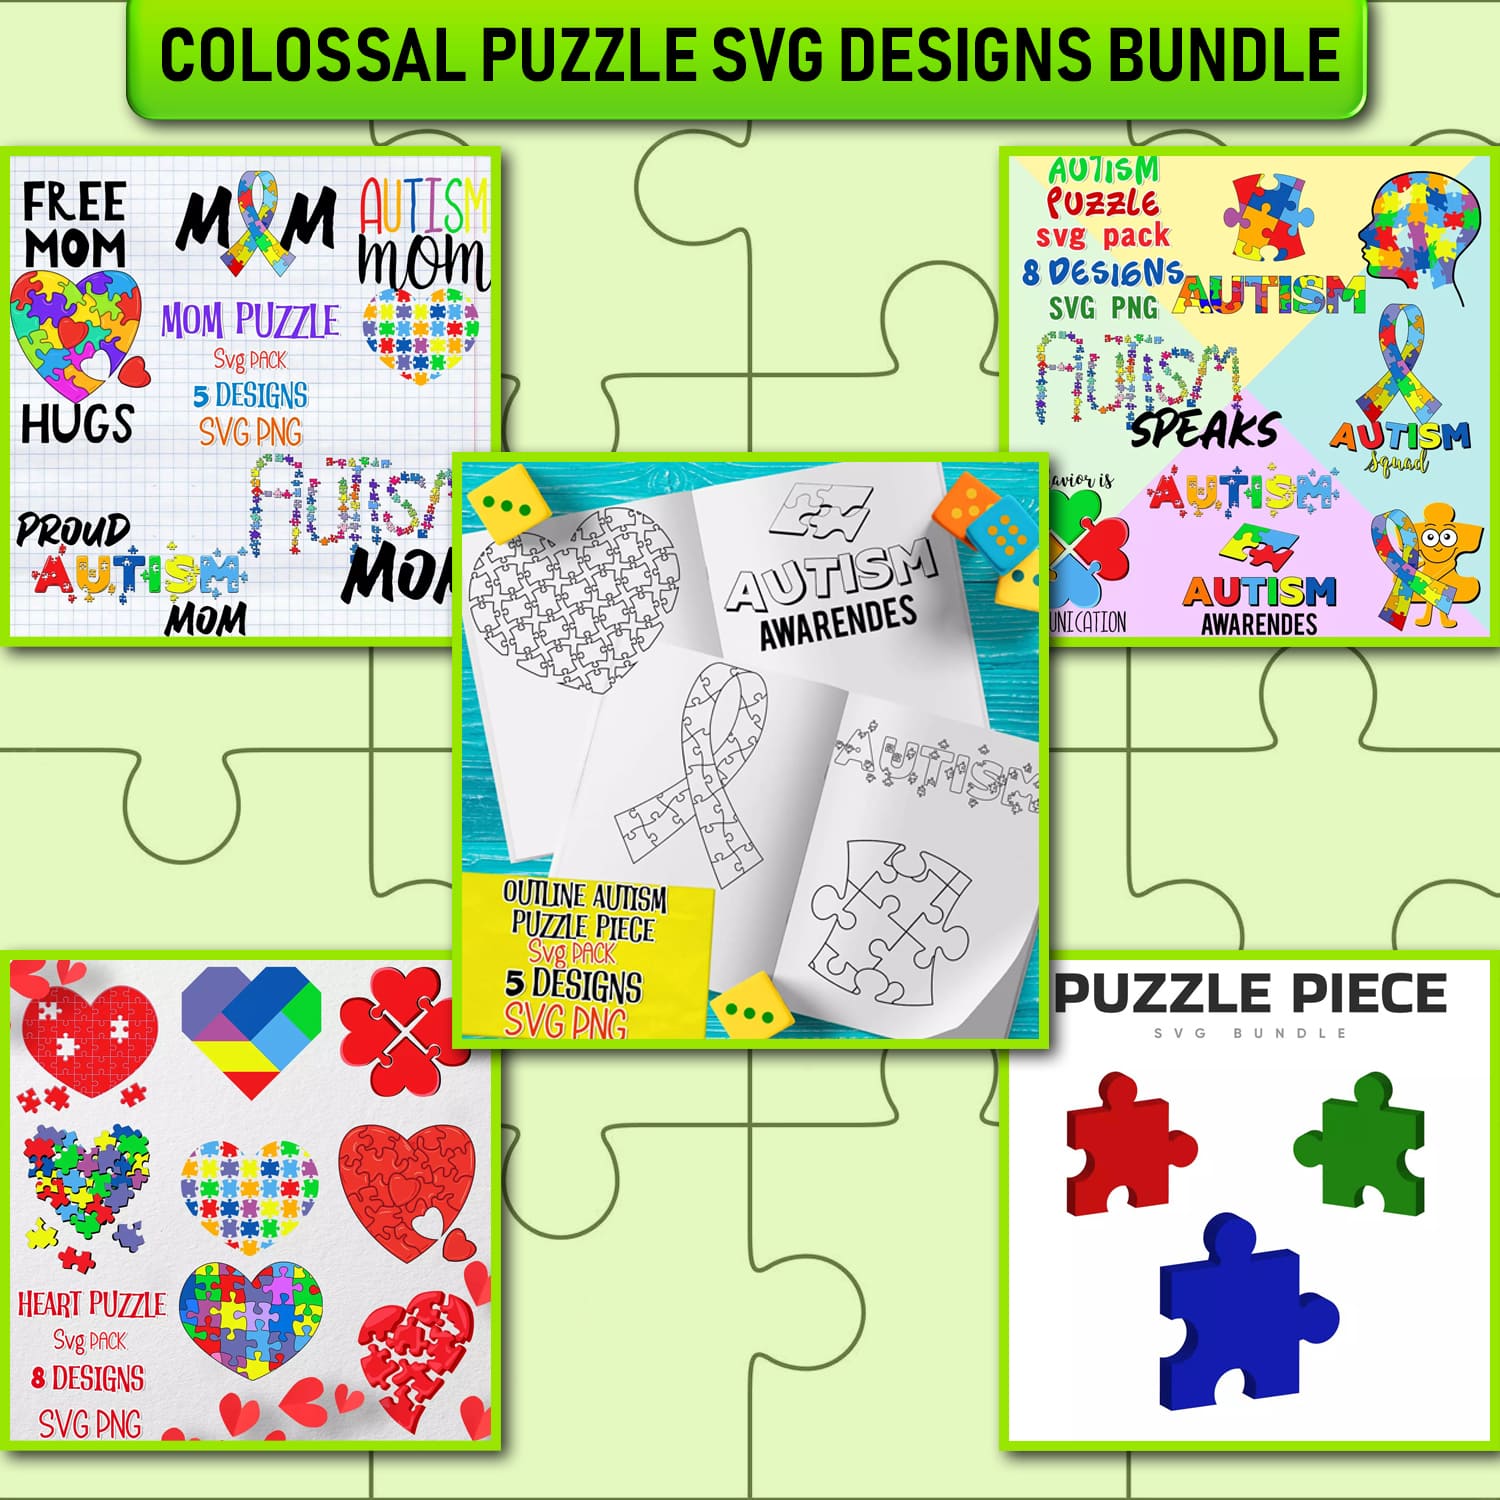 Colossal Puzzle SVG Designs Bundle cover image.